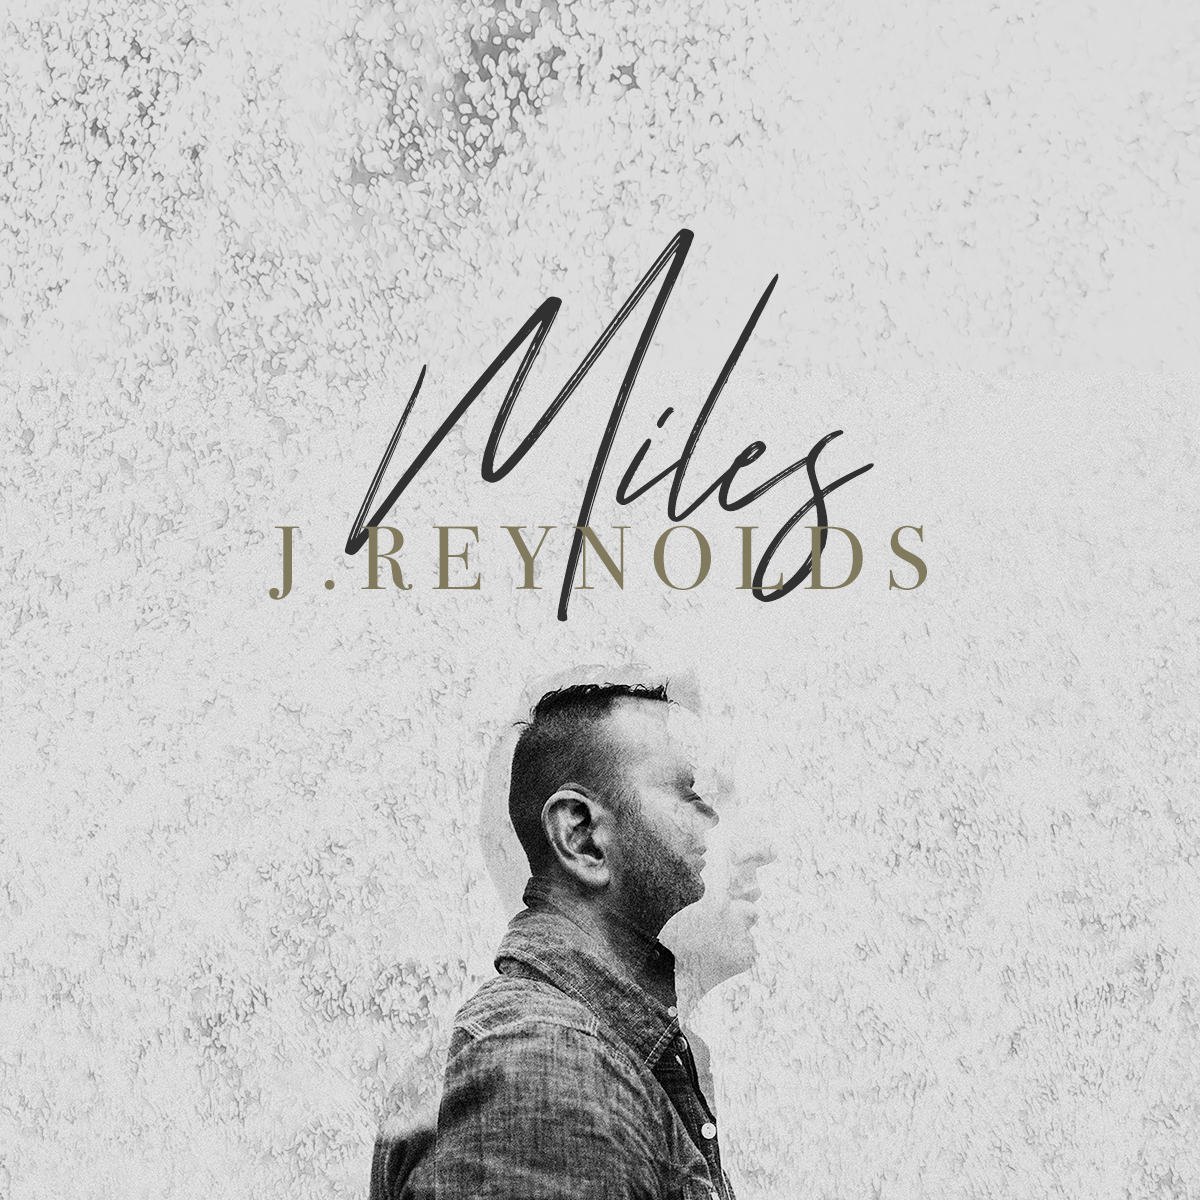 J. Reynolds / Miles